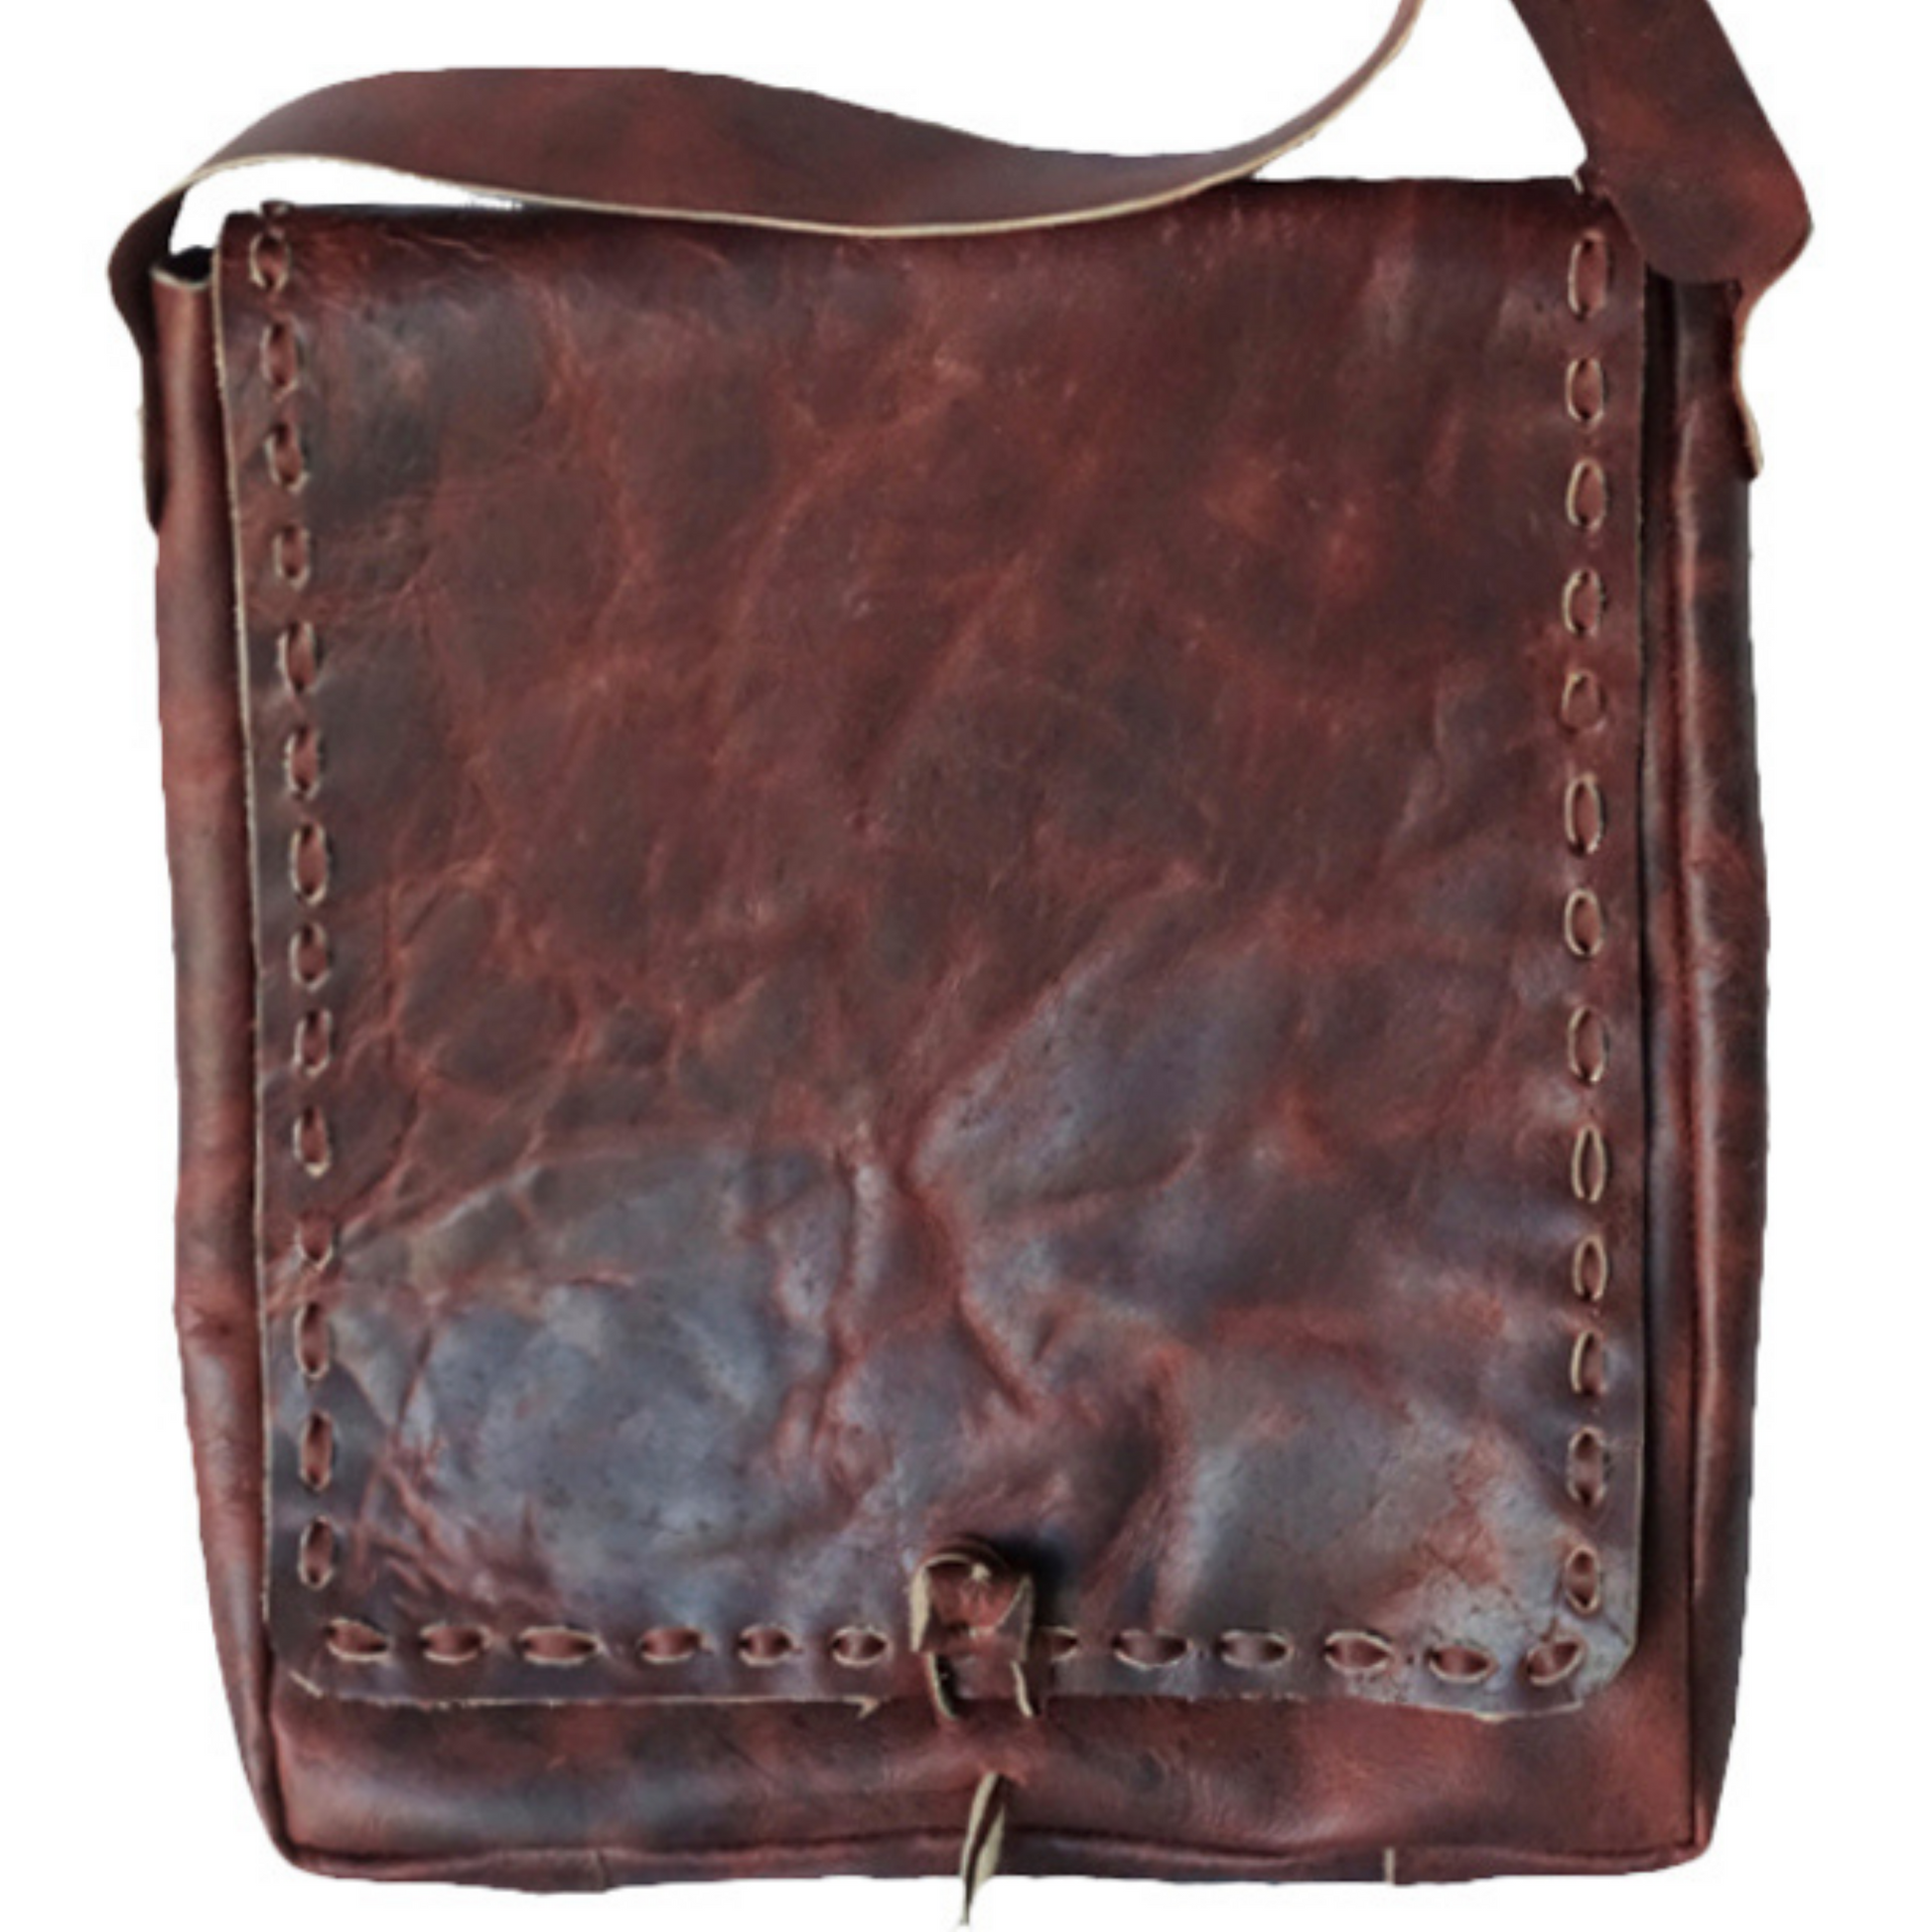 Handmade Leather Satchel Bag - Atitlan Leather